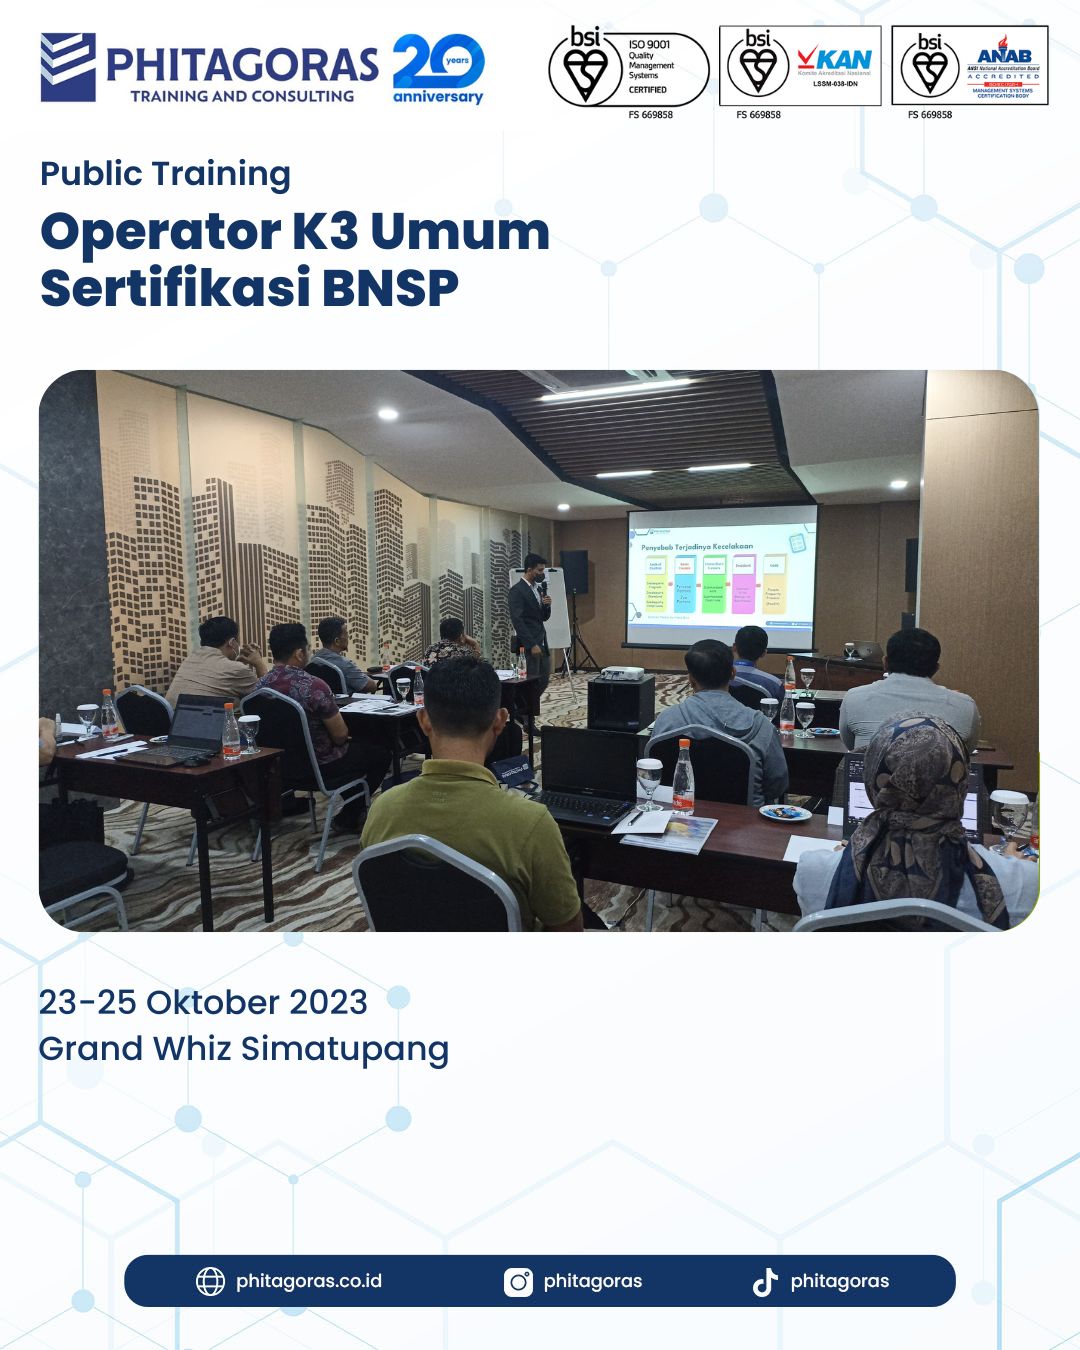 Public Training Operator K3 Umum Sertifikasi BNSP di Grand Whiz Simatupang